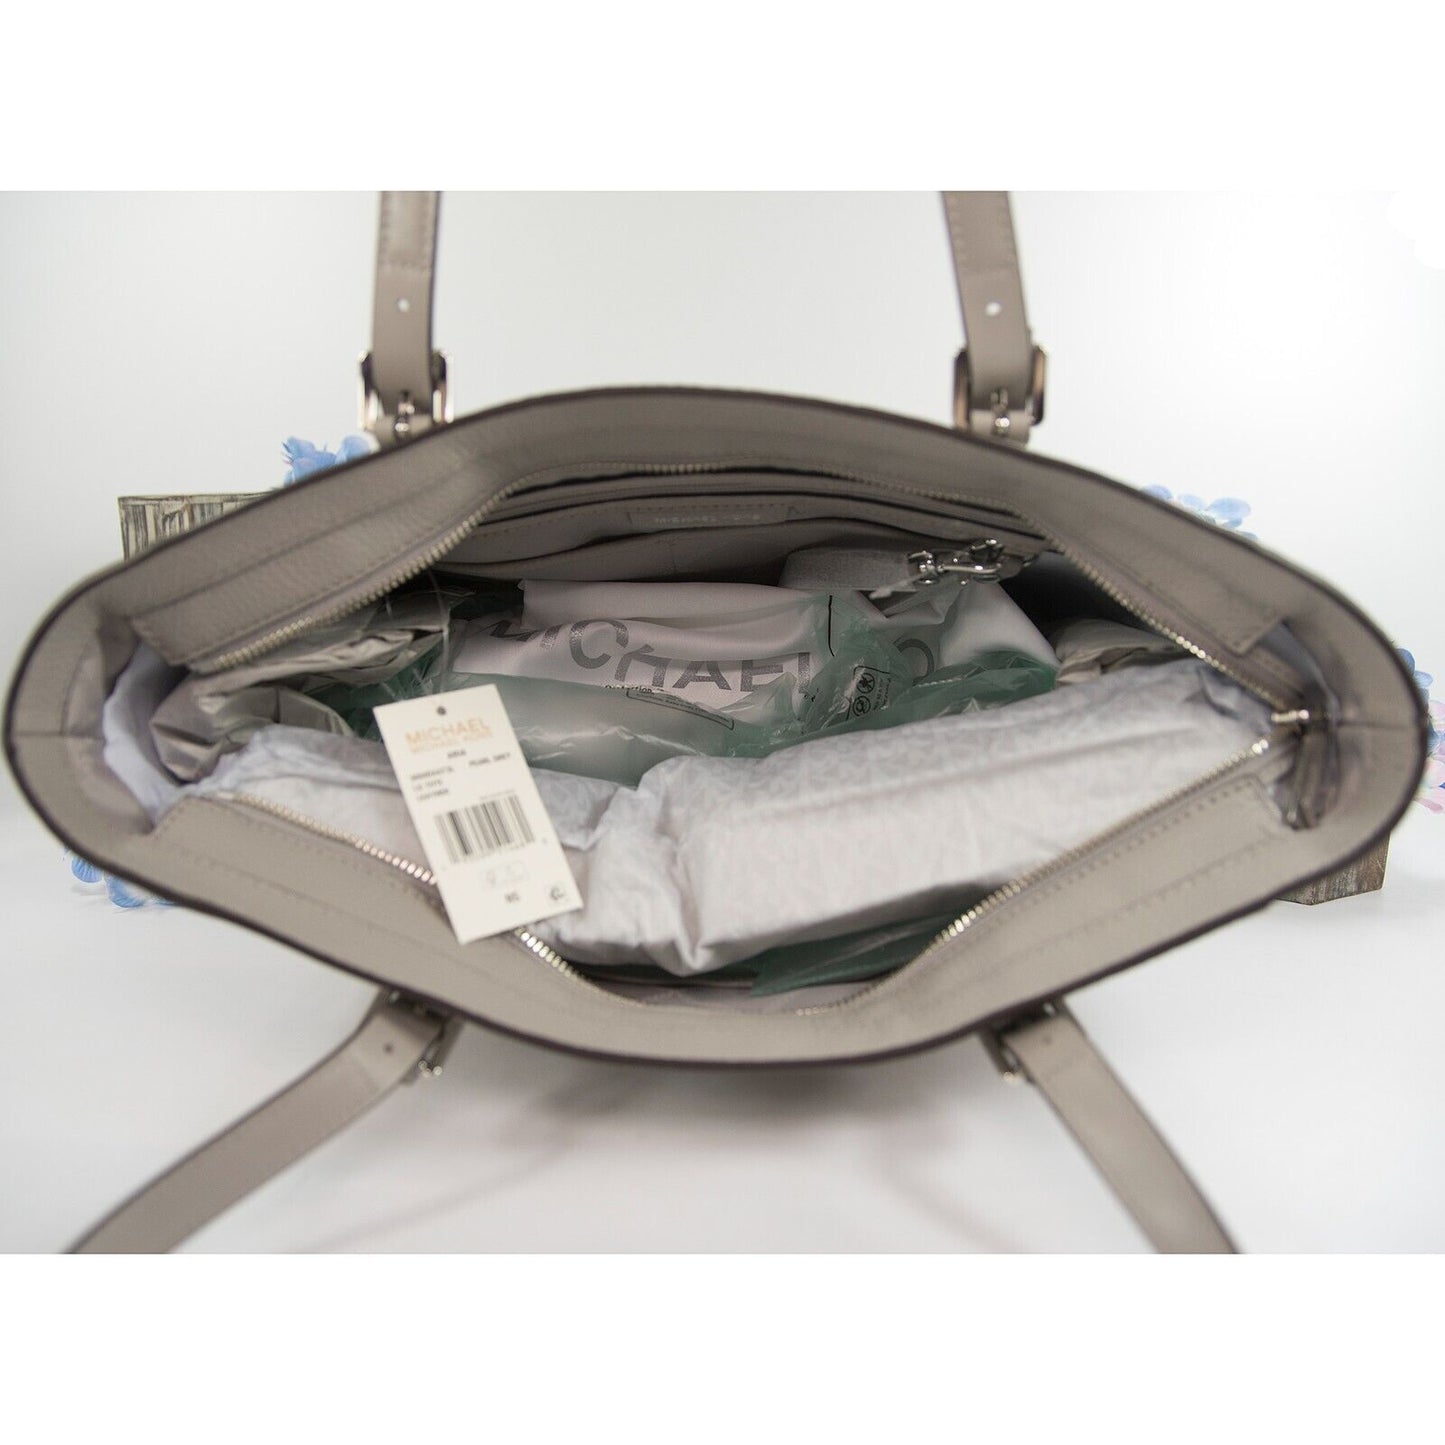 Michael Kors Pearl Grey Leather Aria Large Travel Tote Bag NWT